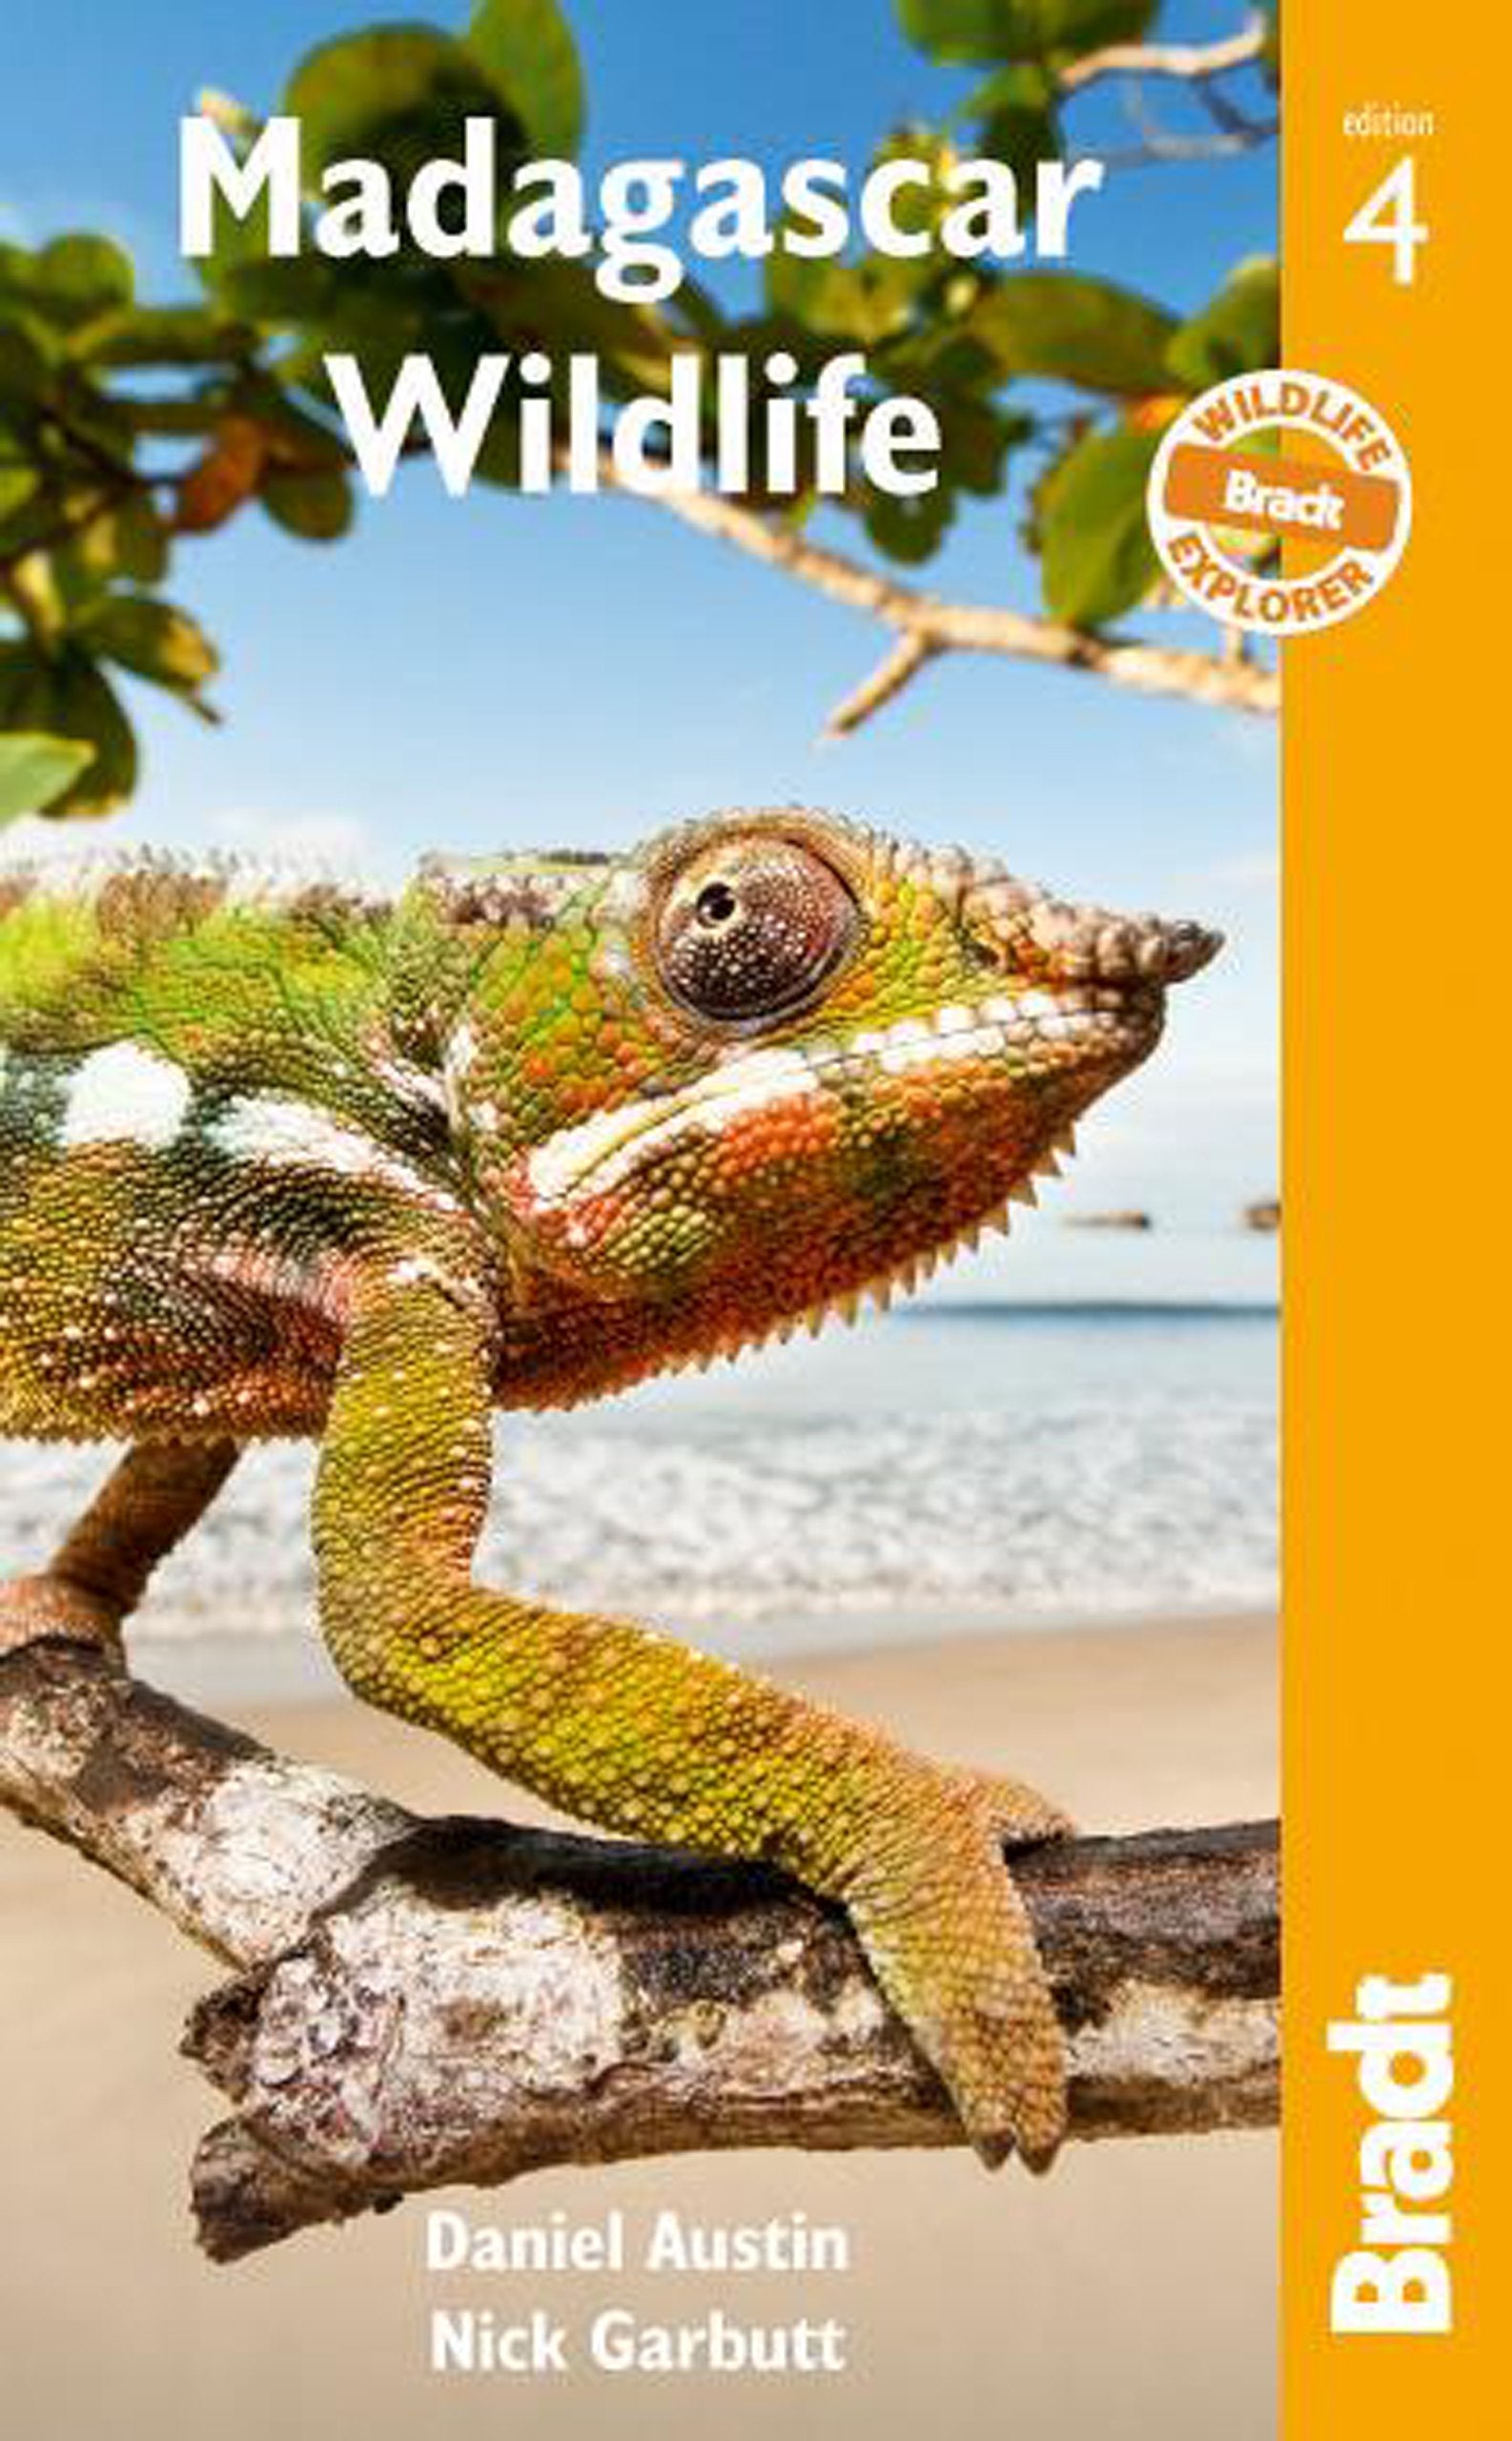 Madagascar Wildlife (Madagaskar) - Bradt Travel Guide (November 2014!)